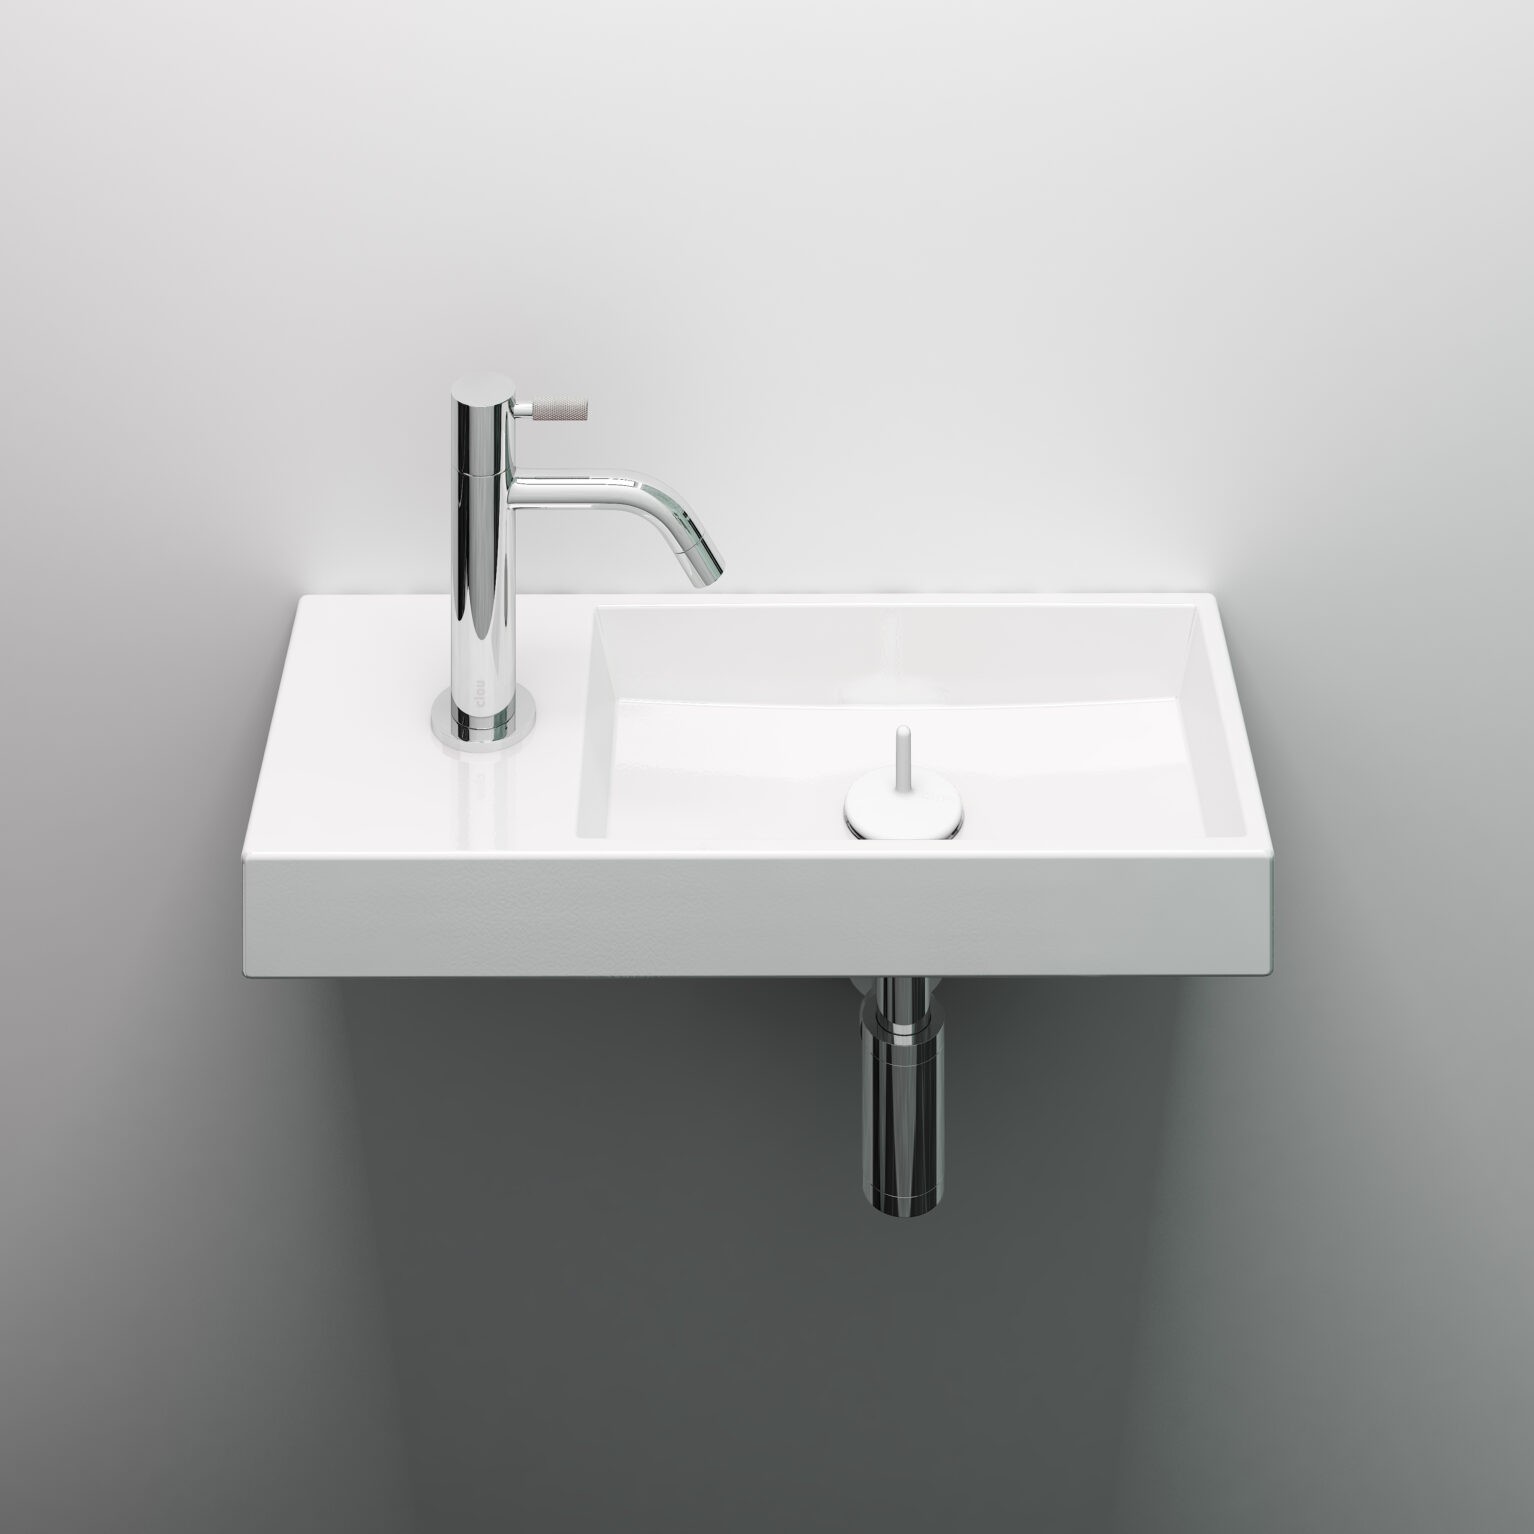 Wash-Me-fontein-siliconen-waterstop-wit-sifon-koudwaterkraan-Freddo-badkamer-luxe-sanitair-clou-CL0655020